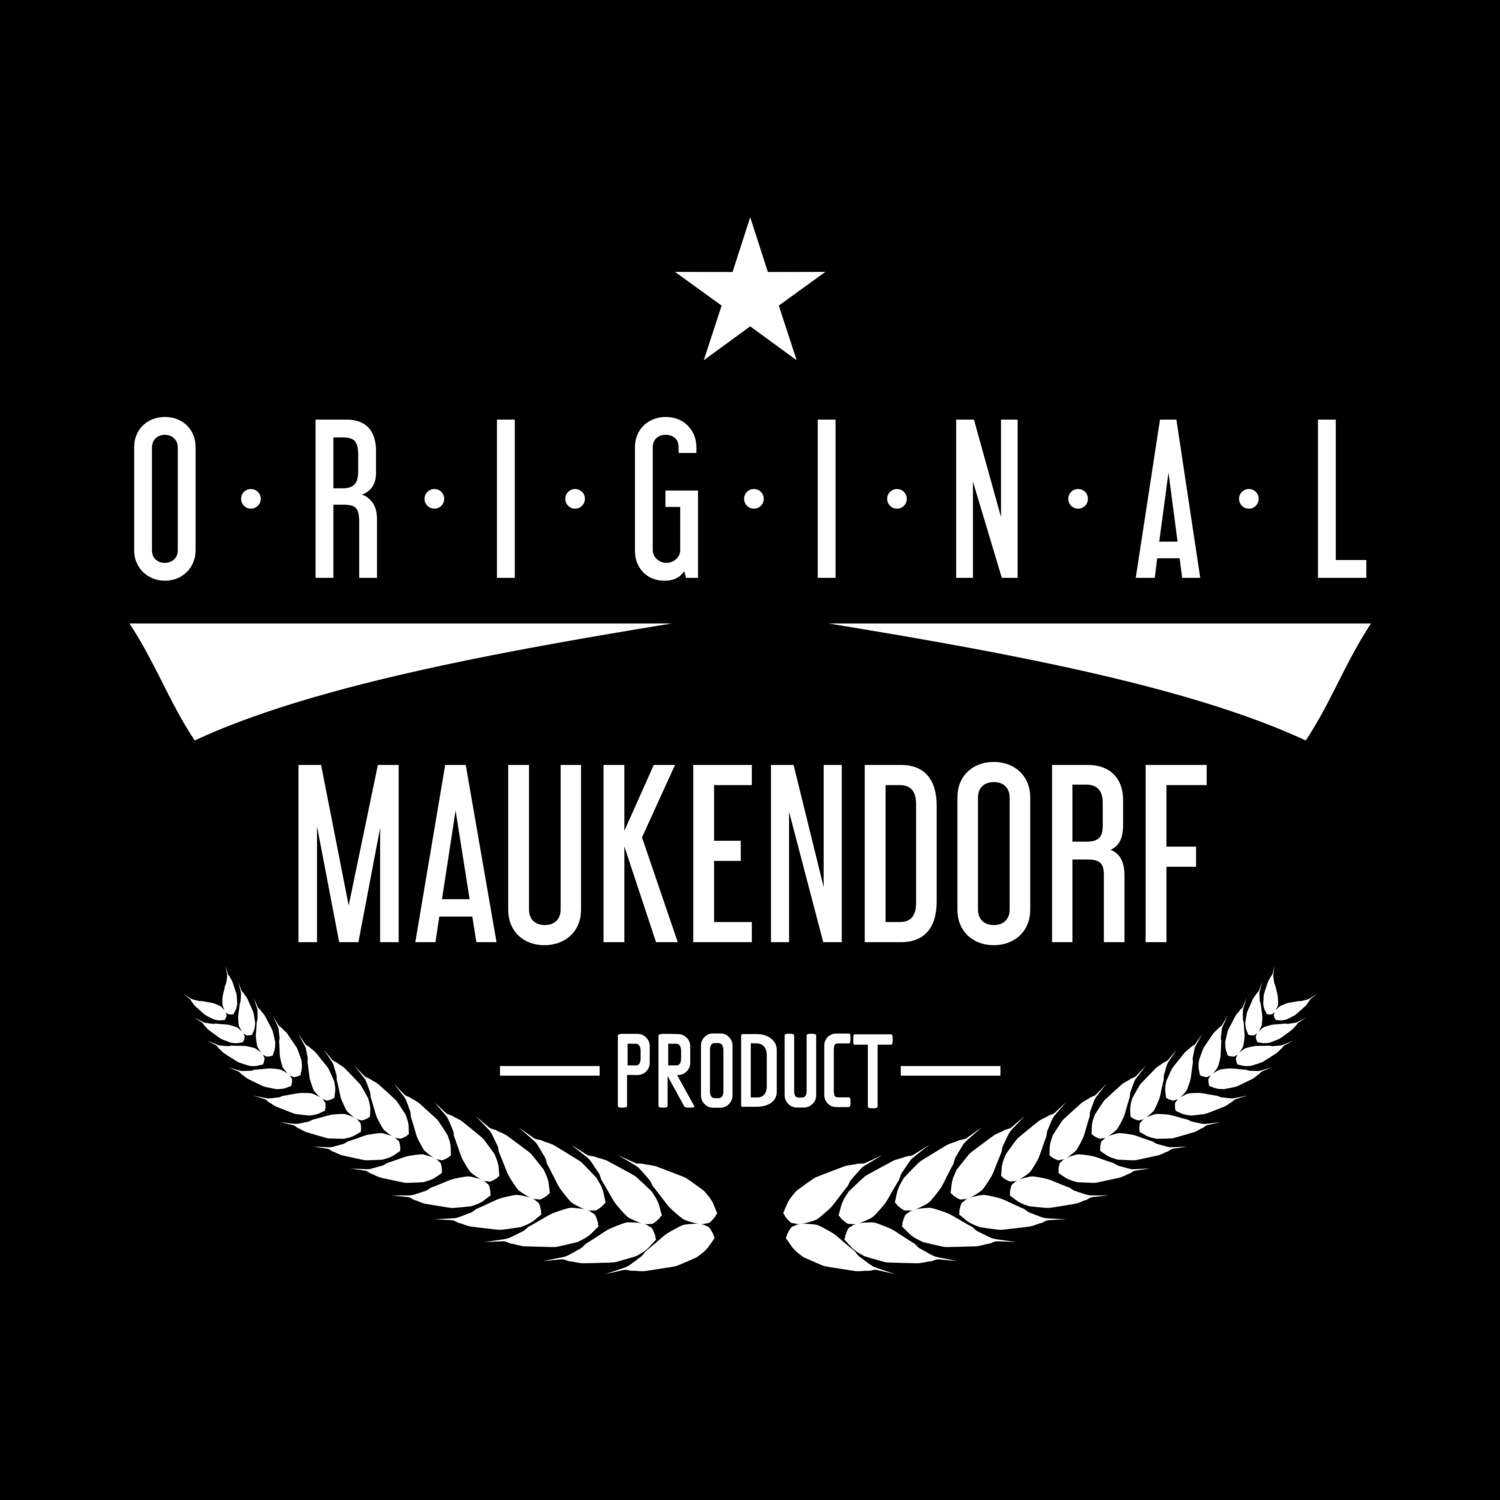 Maukendorf T-Shirt »Original Product«